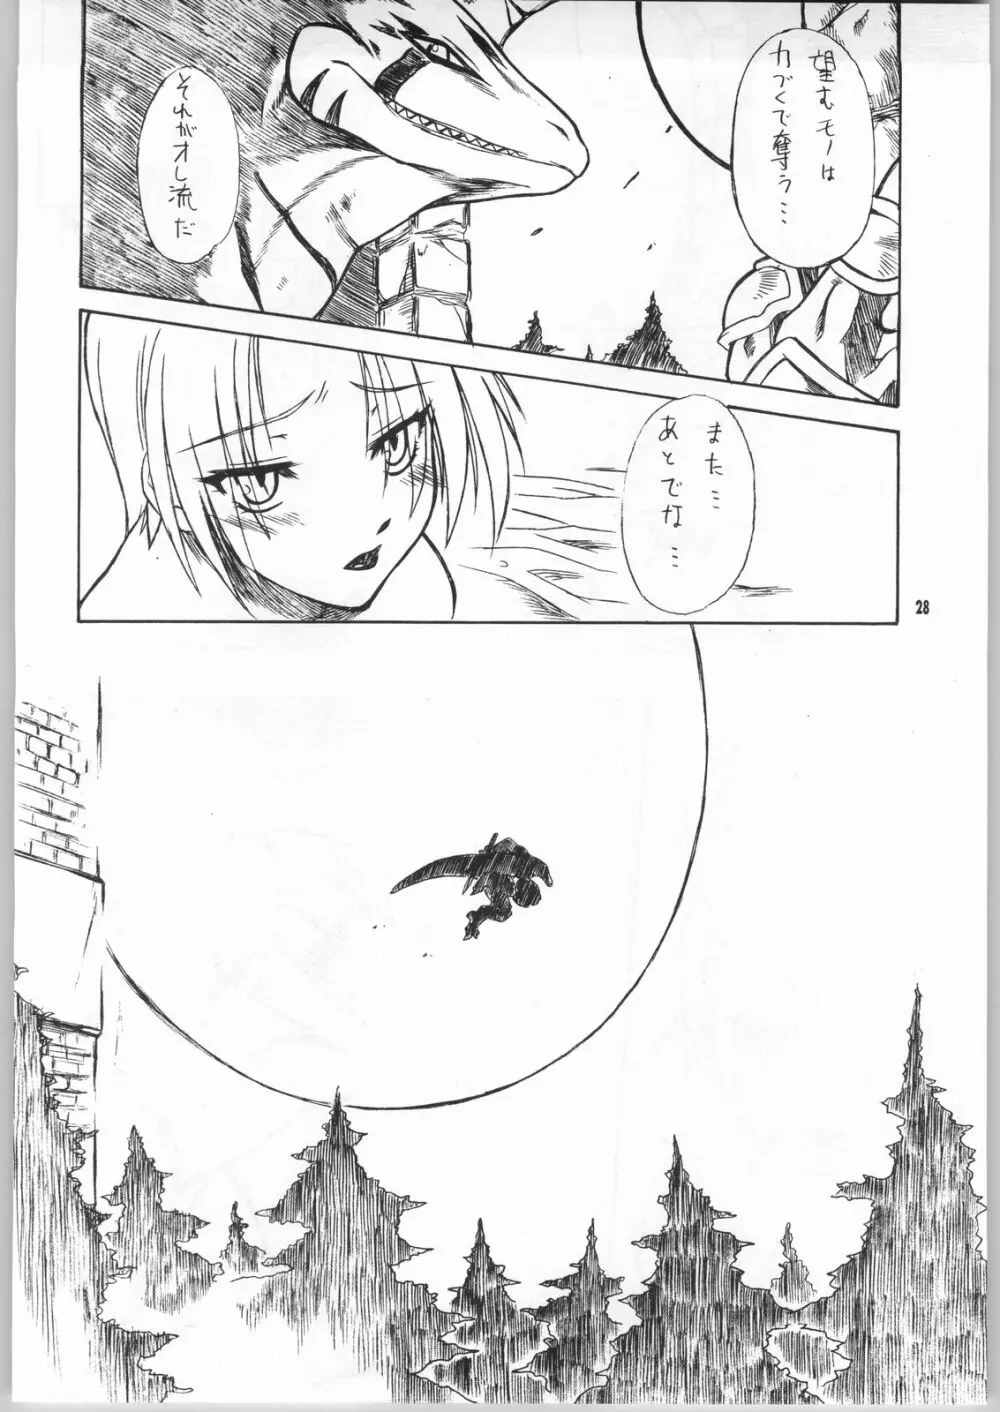 BEAST -美獣- - page27